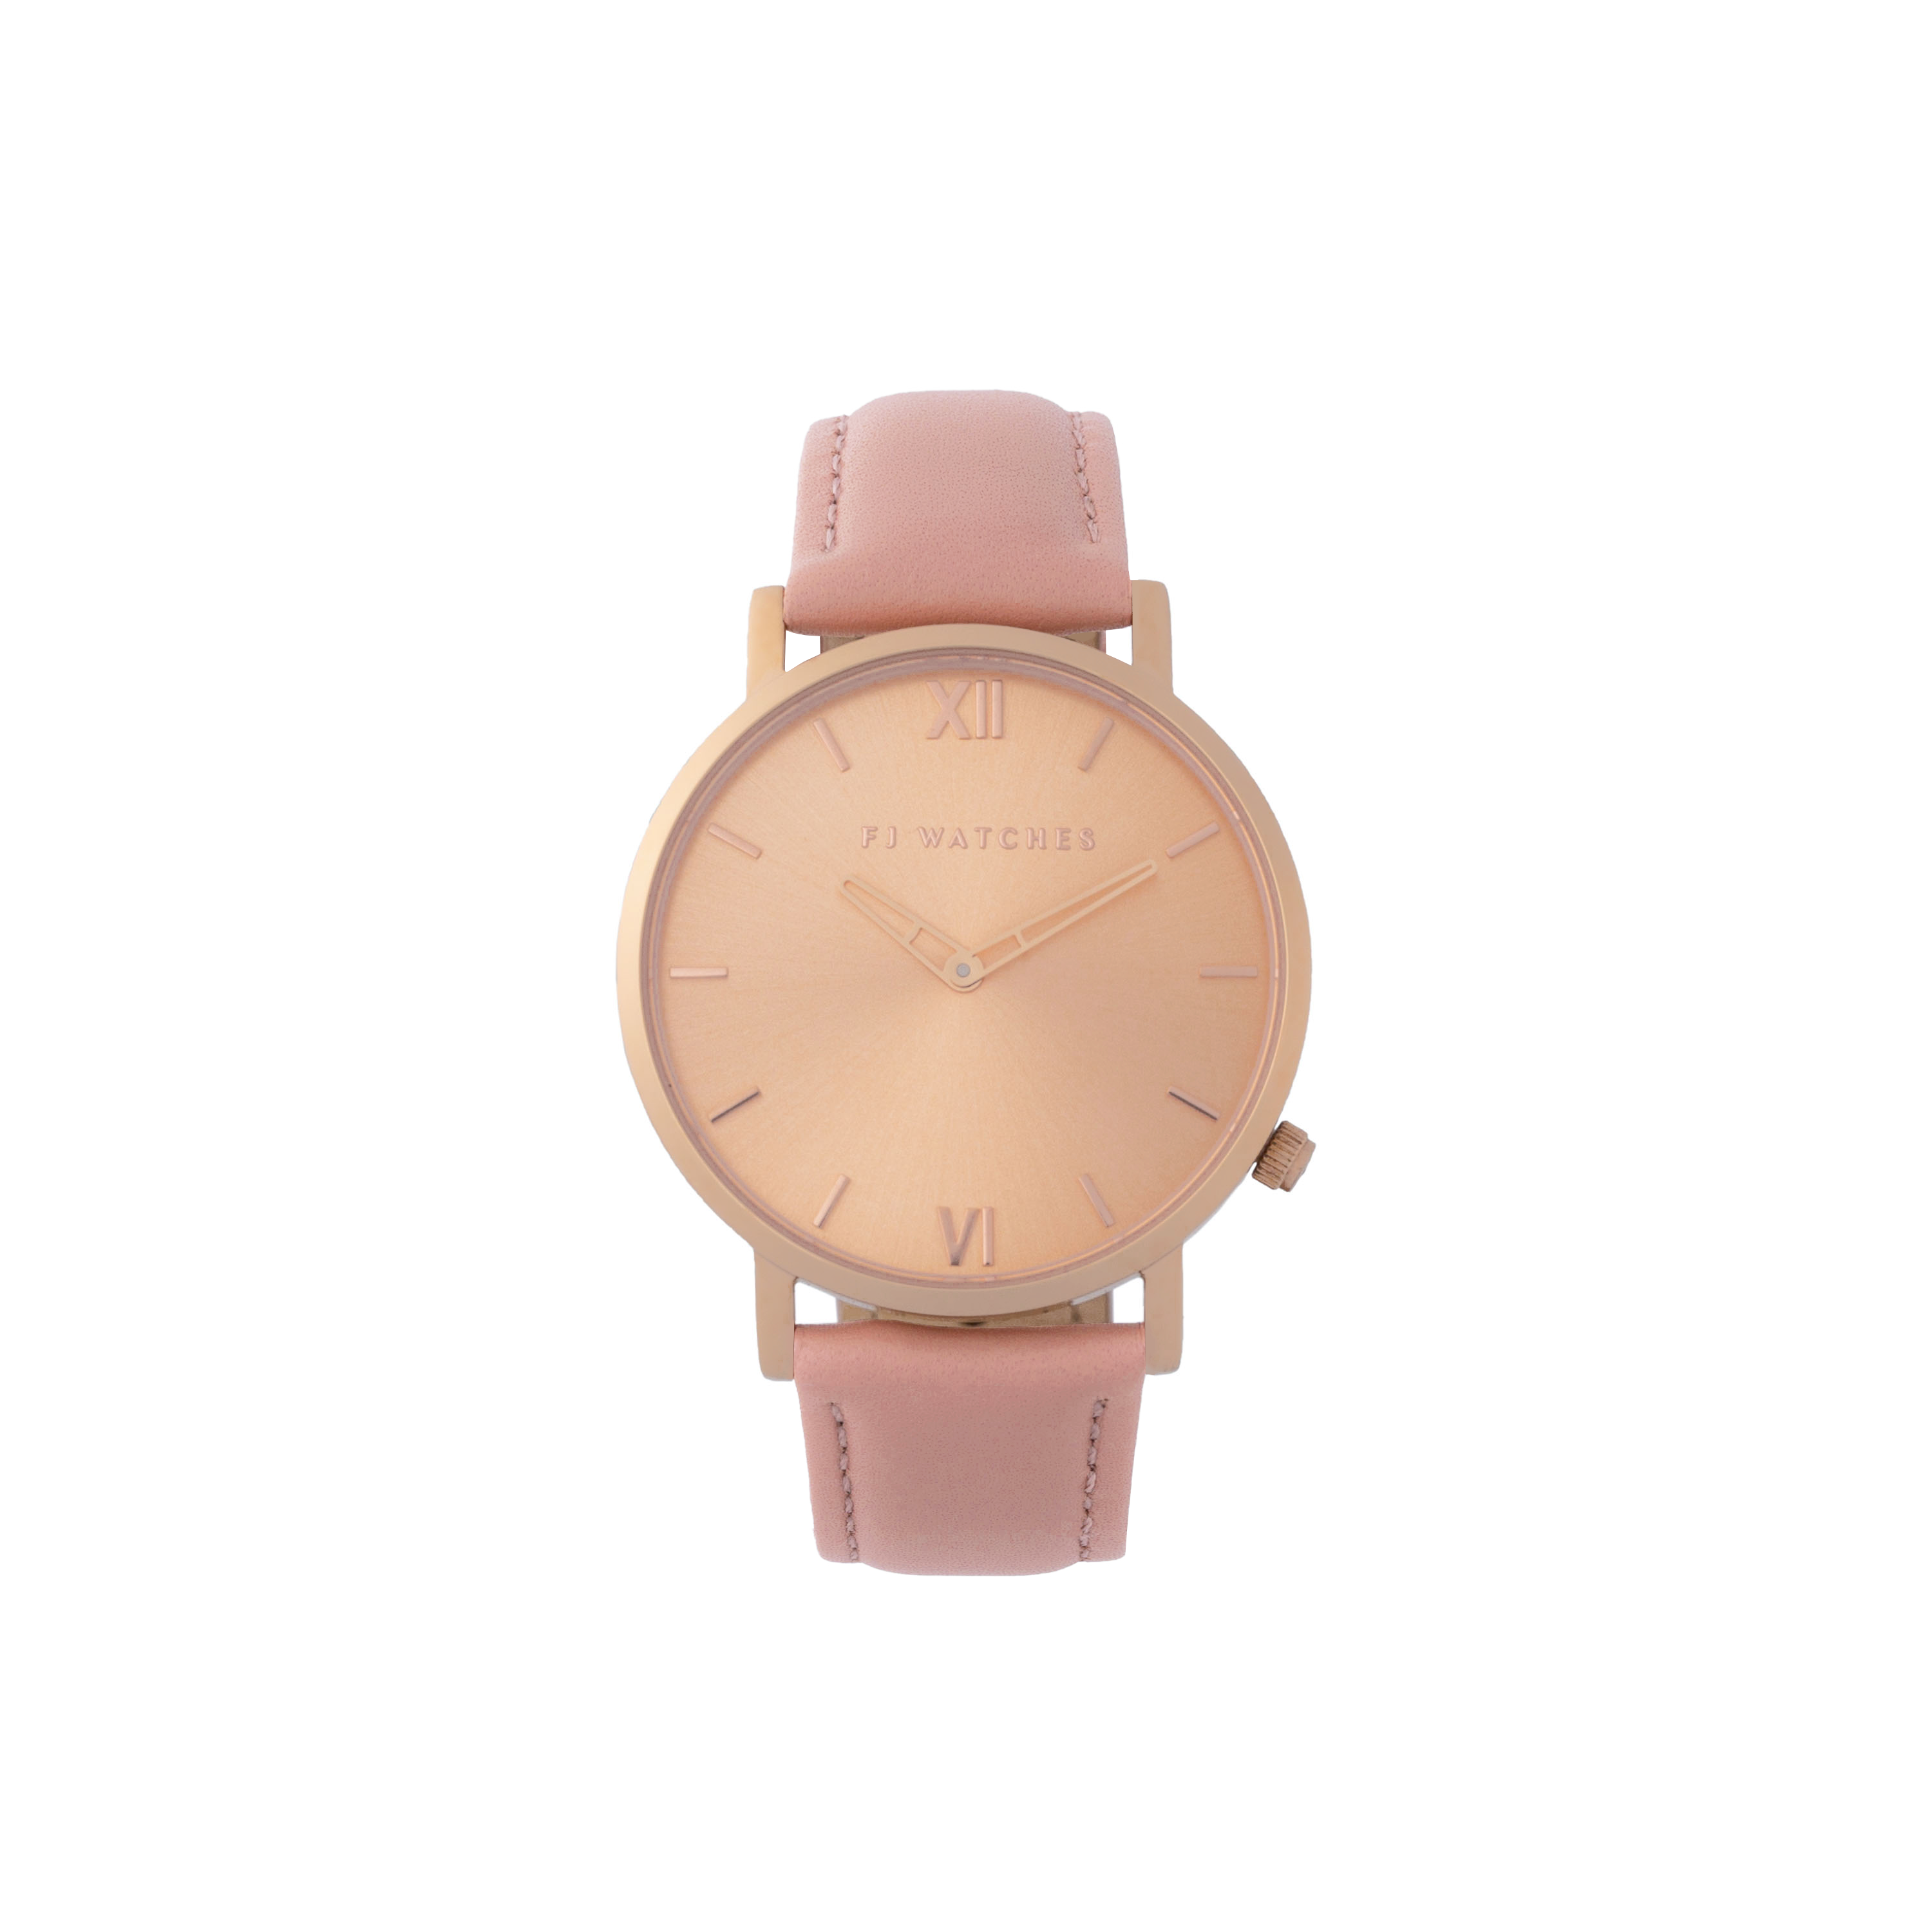 FJ Watches sunset rose gold rosegold watch women 36mm pink leather minimalist